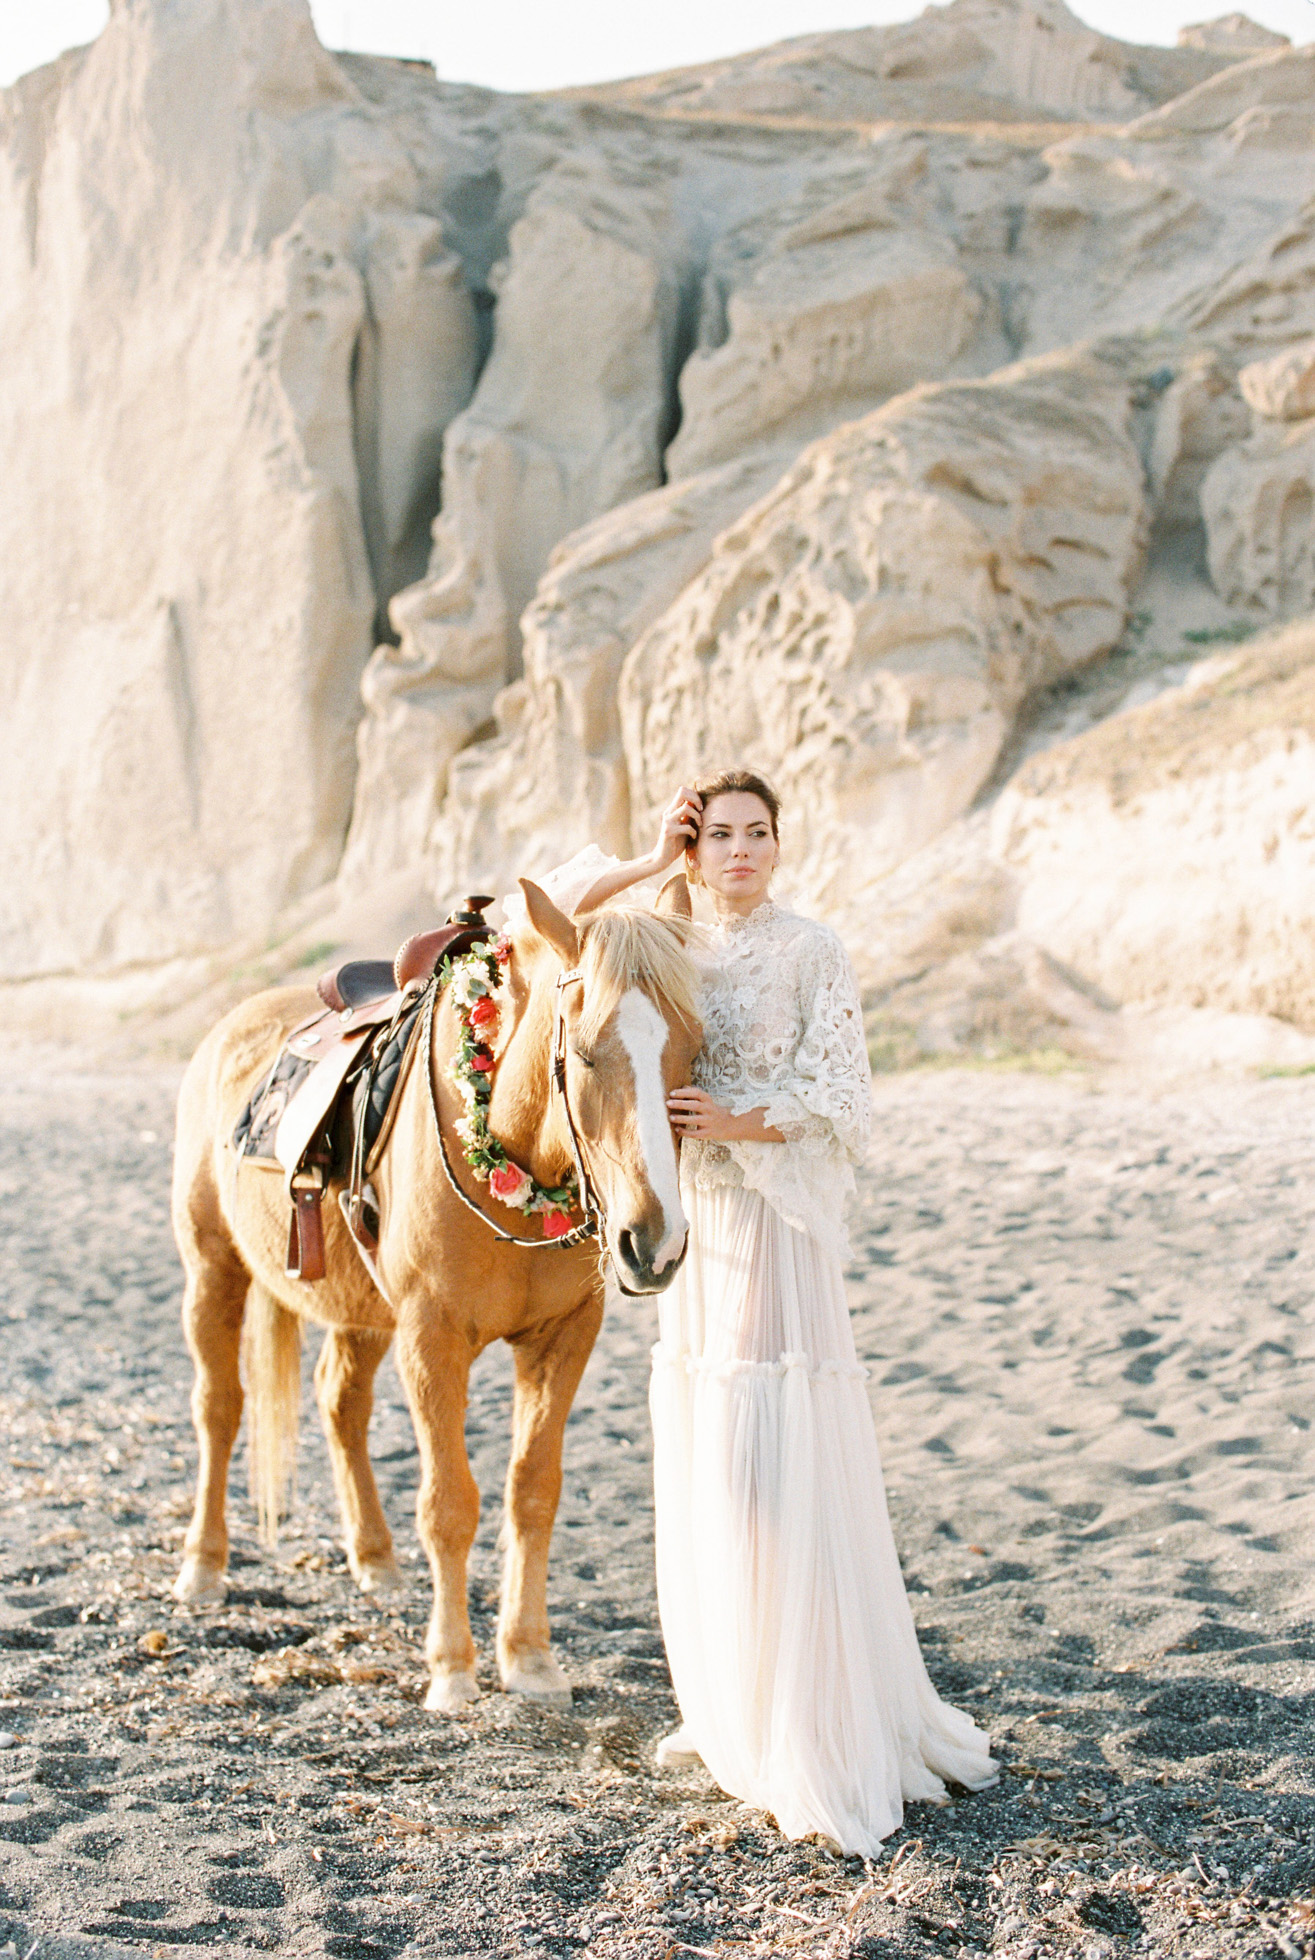 Beautiful bride wearing designer wedding dress holding a horse at a volcanic beach wedding inspiration session in Santorini Greece.